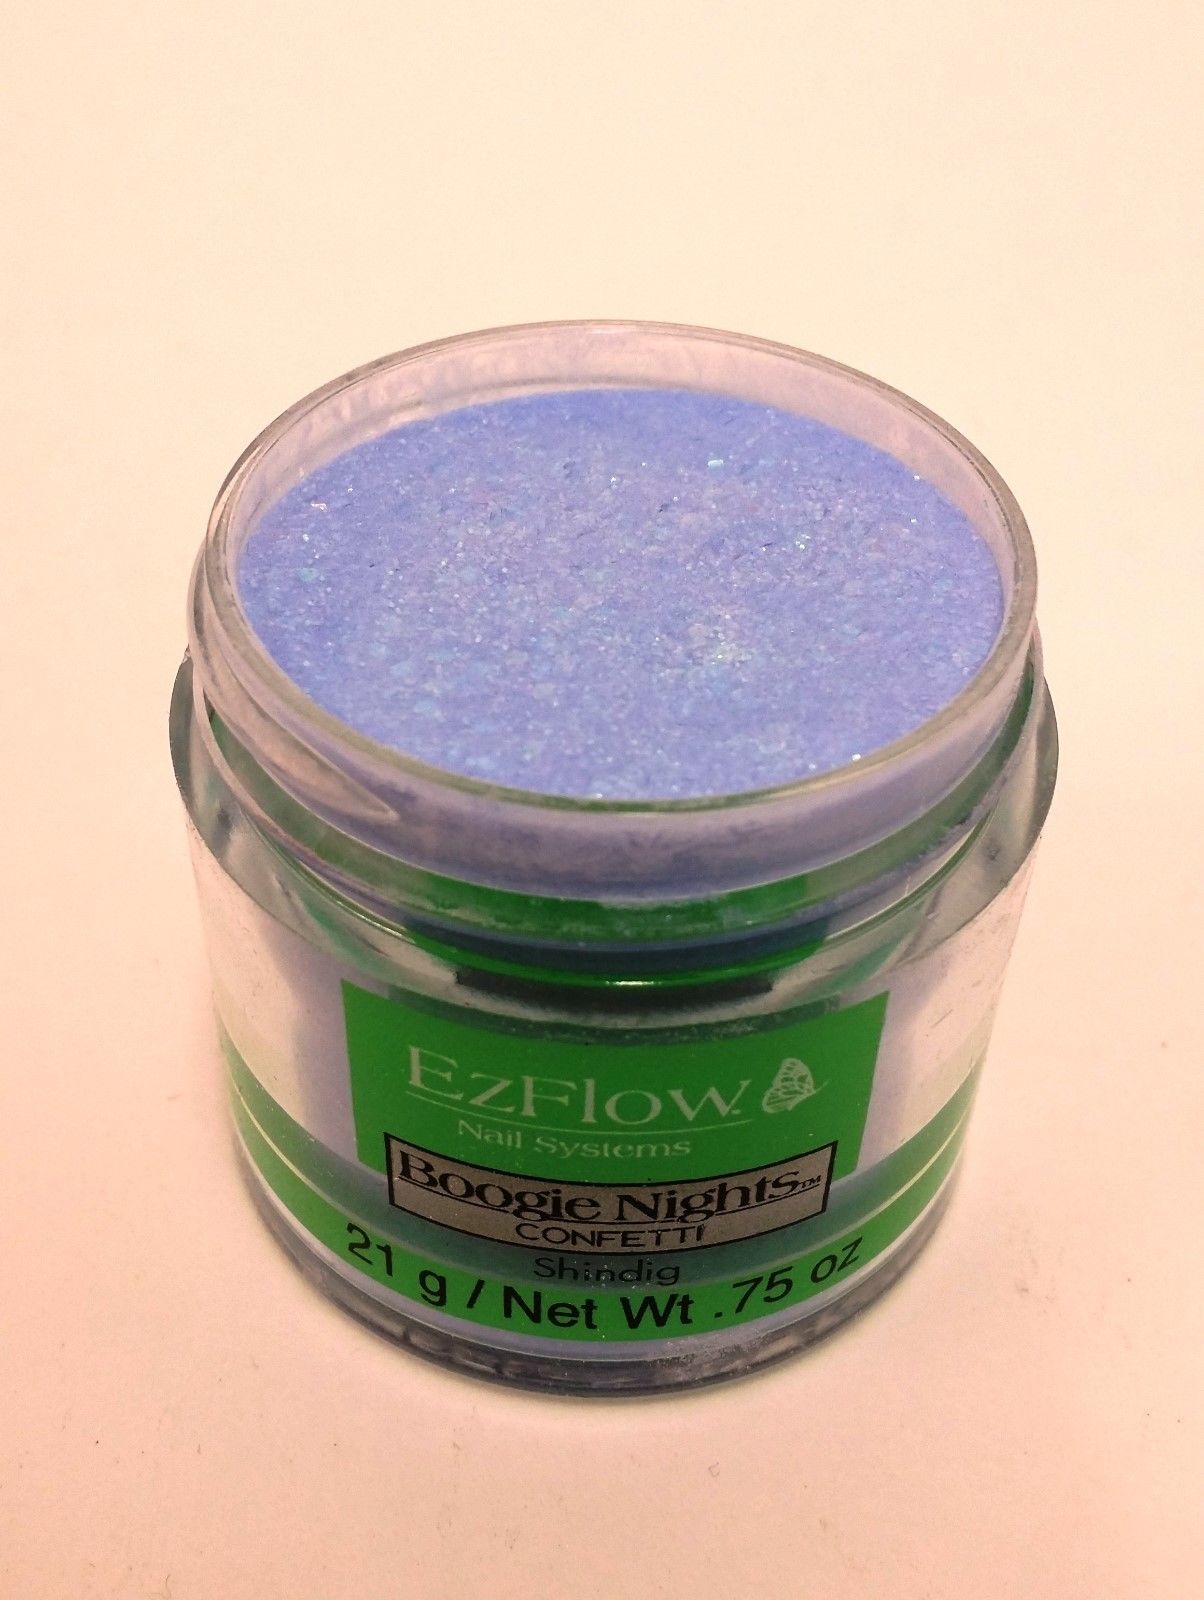 EzFlow Boogie Nights Acrylic Glitter Powder  "CONFETTI"  - Choose your Colors